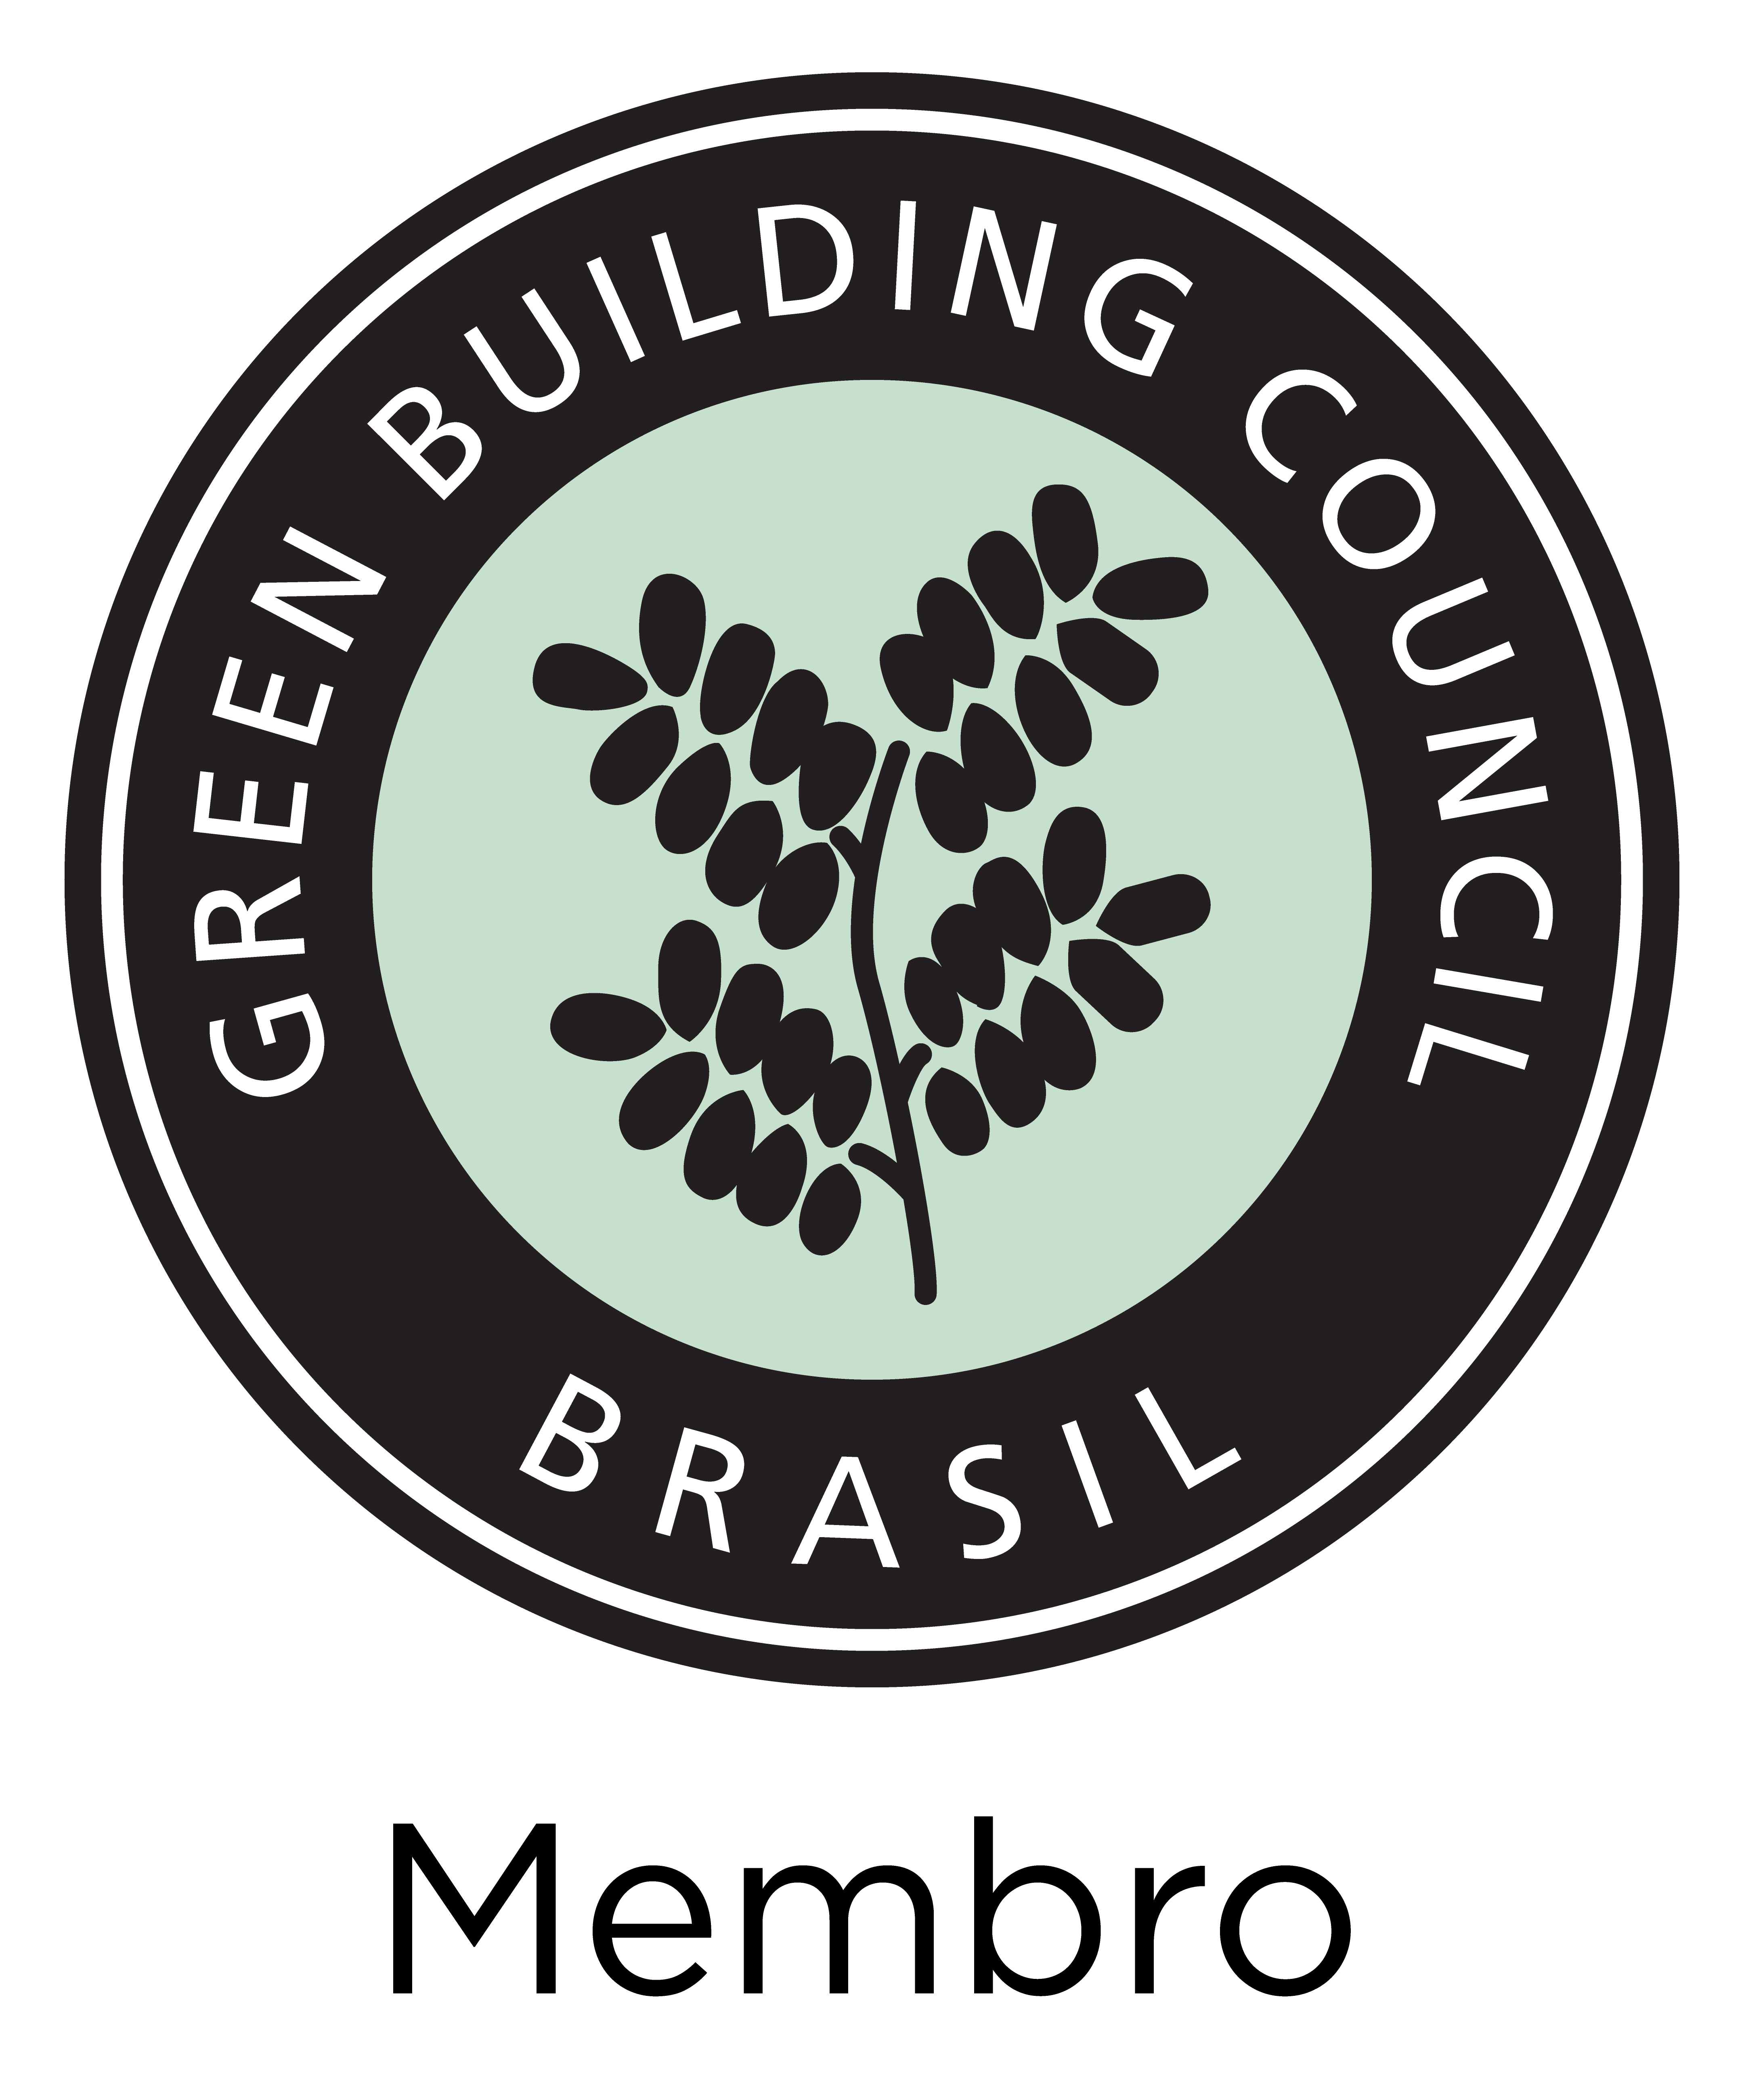 Green Building Council Brasil 